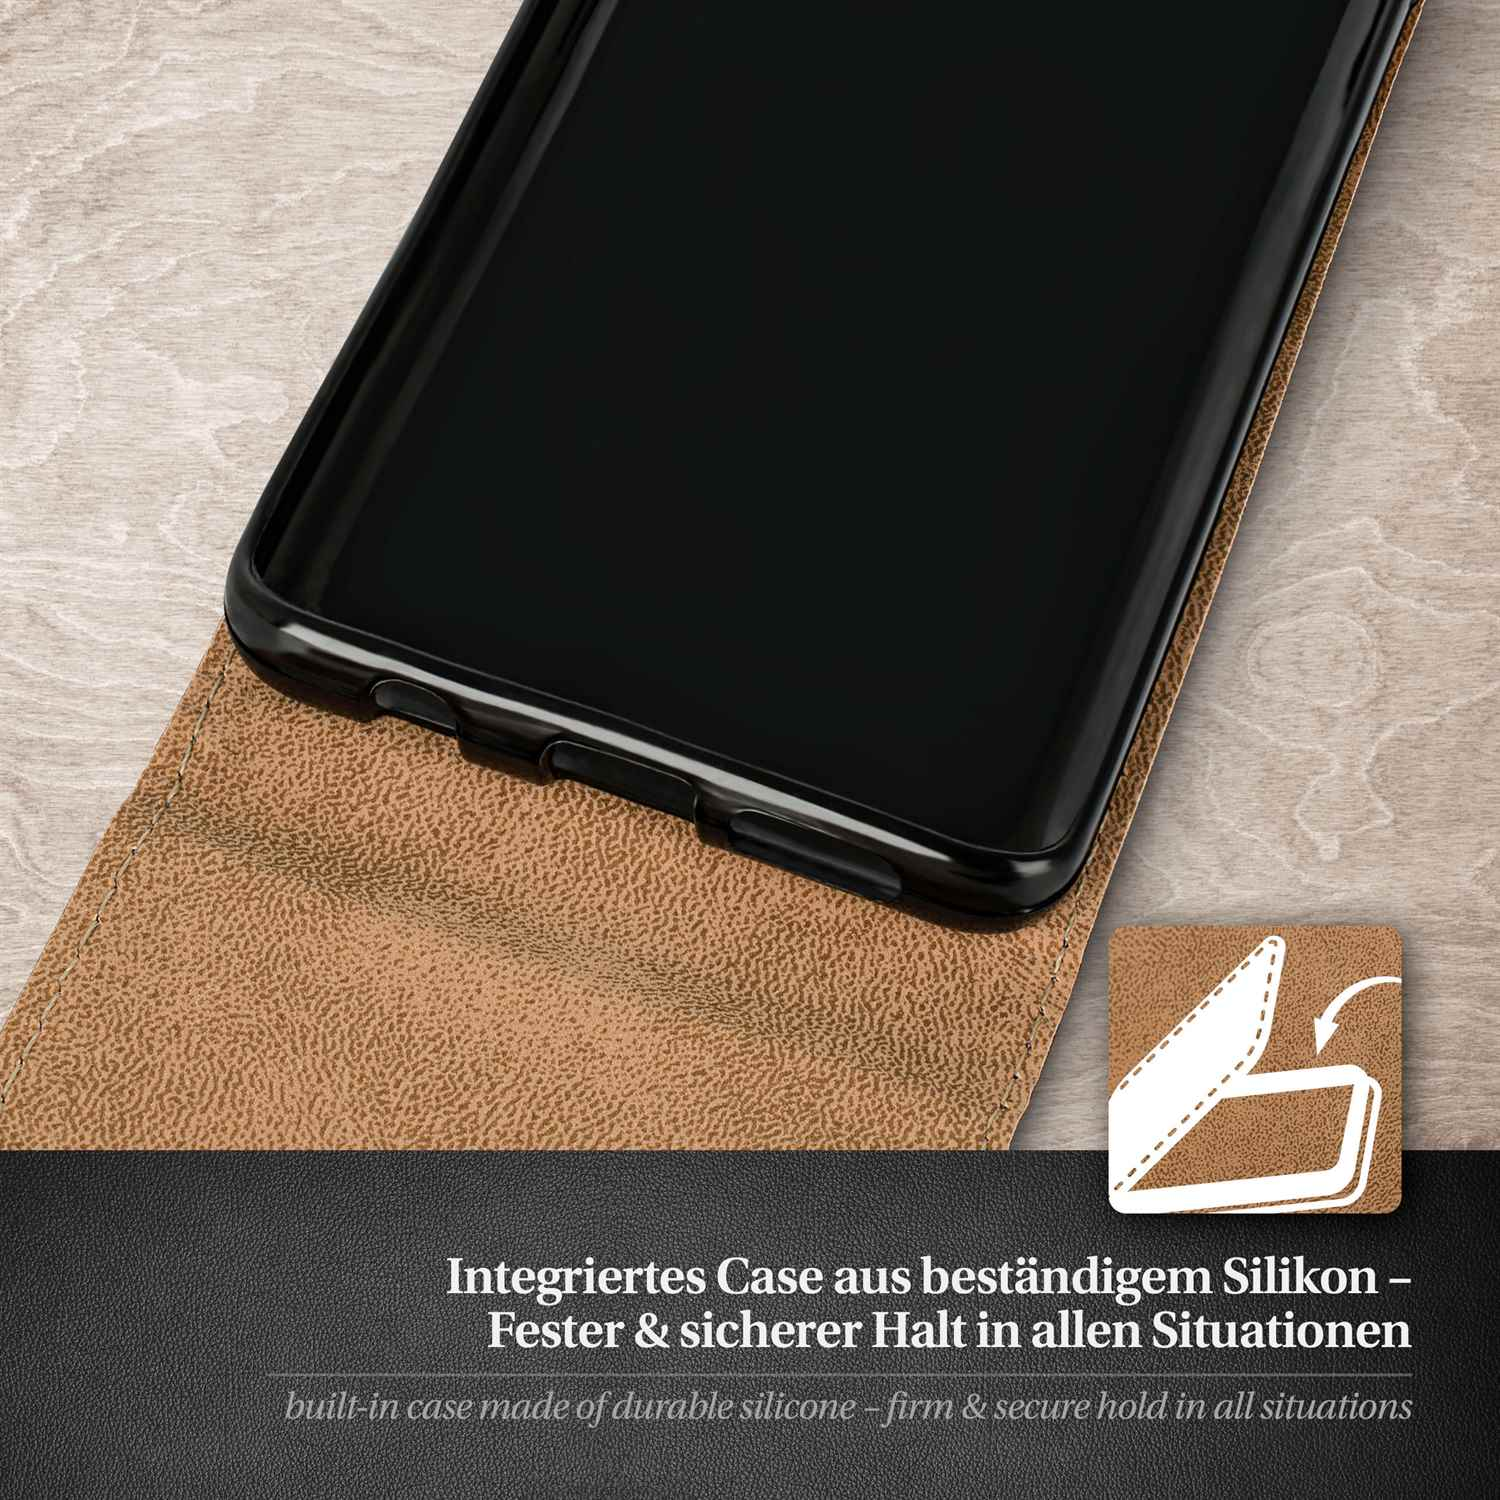 Cover, Flip Case, Galaxy S21 Samsung, 5G, MOEX Royal-Blue FE Flip